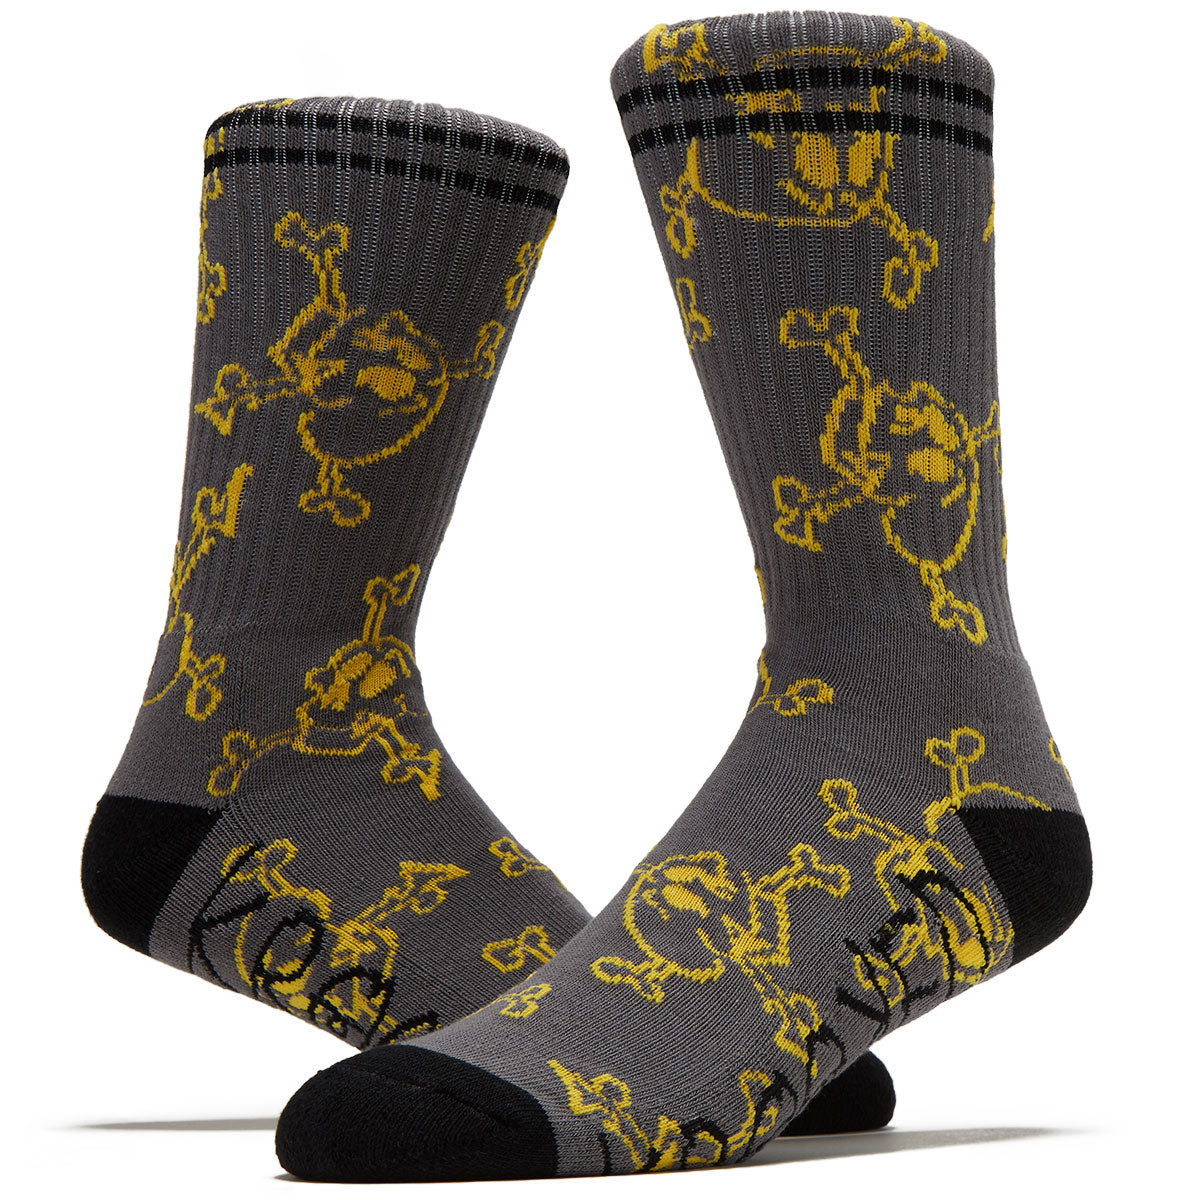 Krooked Style Socks - Charcoal/Yellow/Black image 2